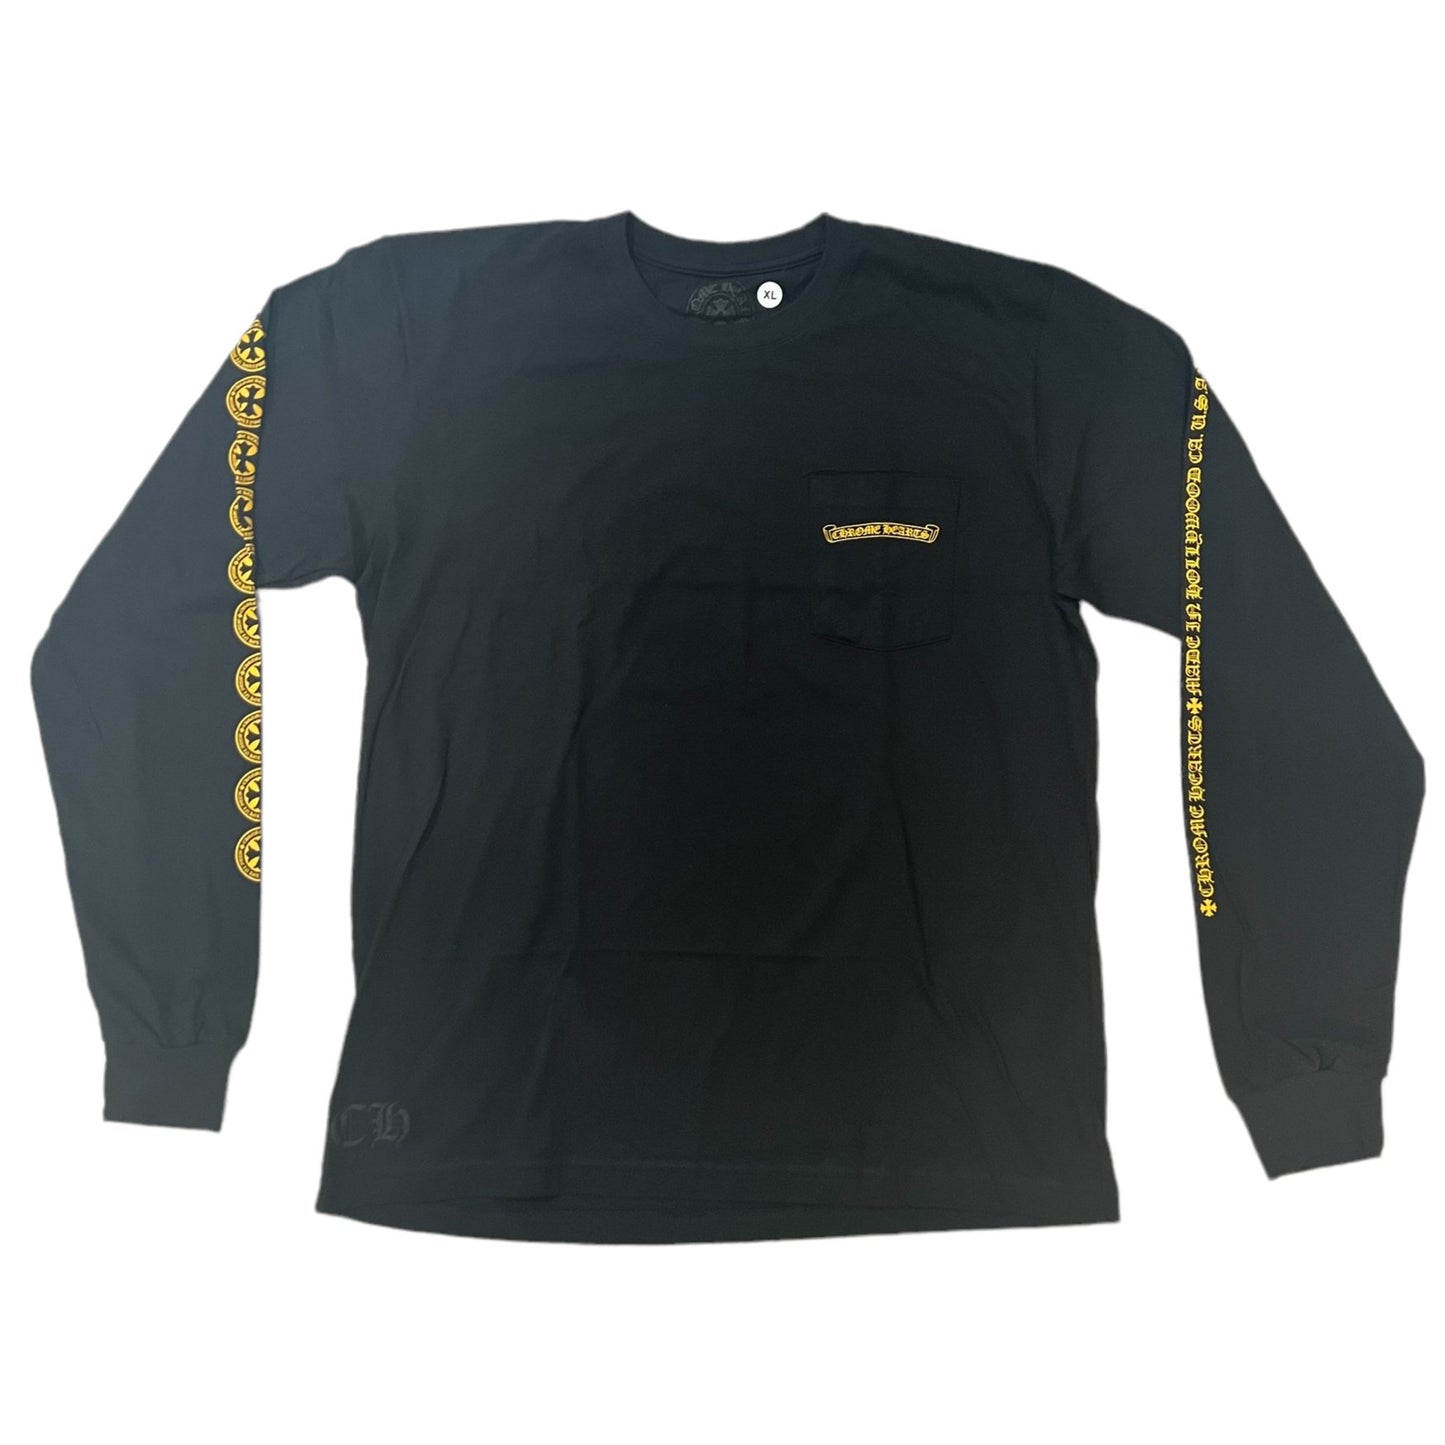 Chrome Hearts Emblem Long Sleeve Tee Black / Gold - Supra Sneakers